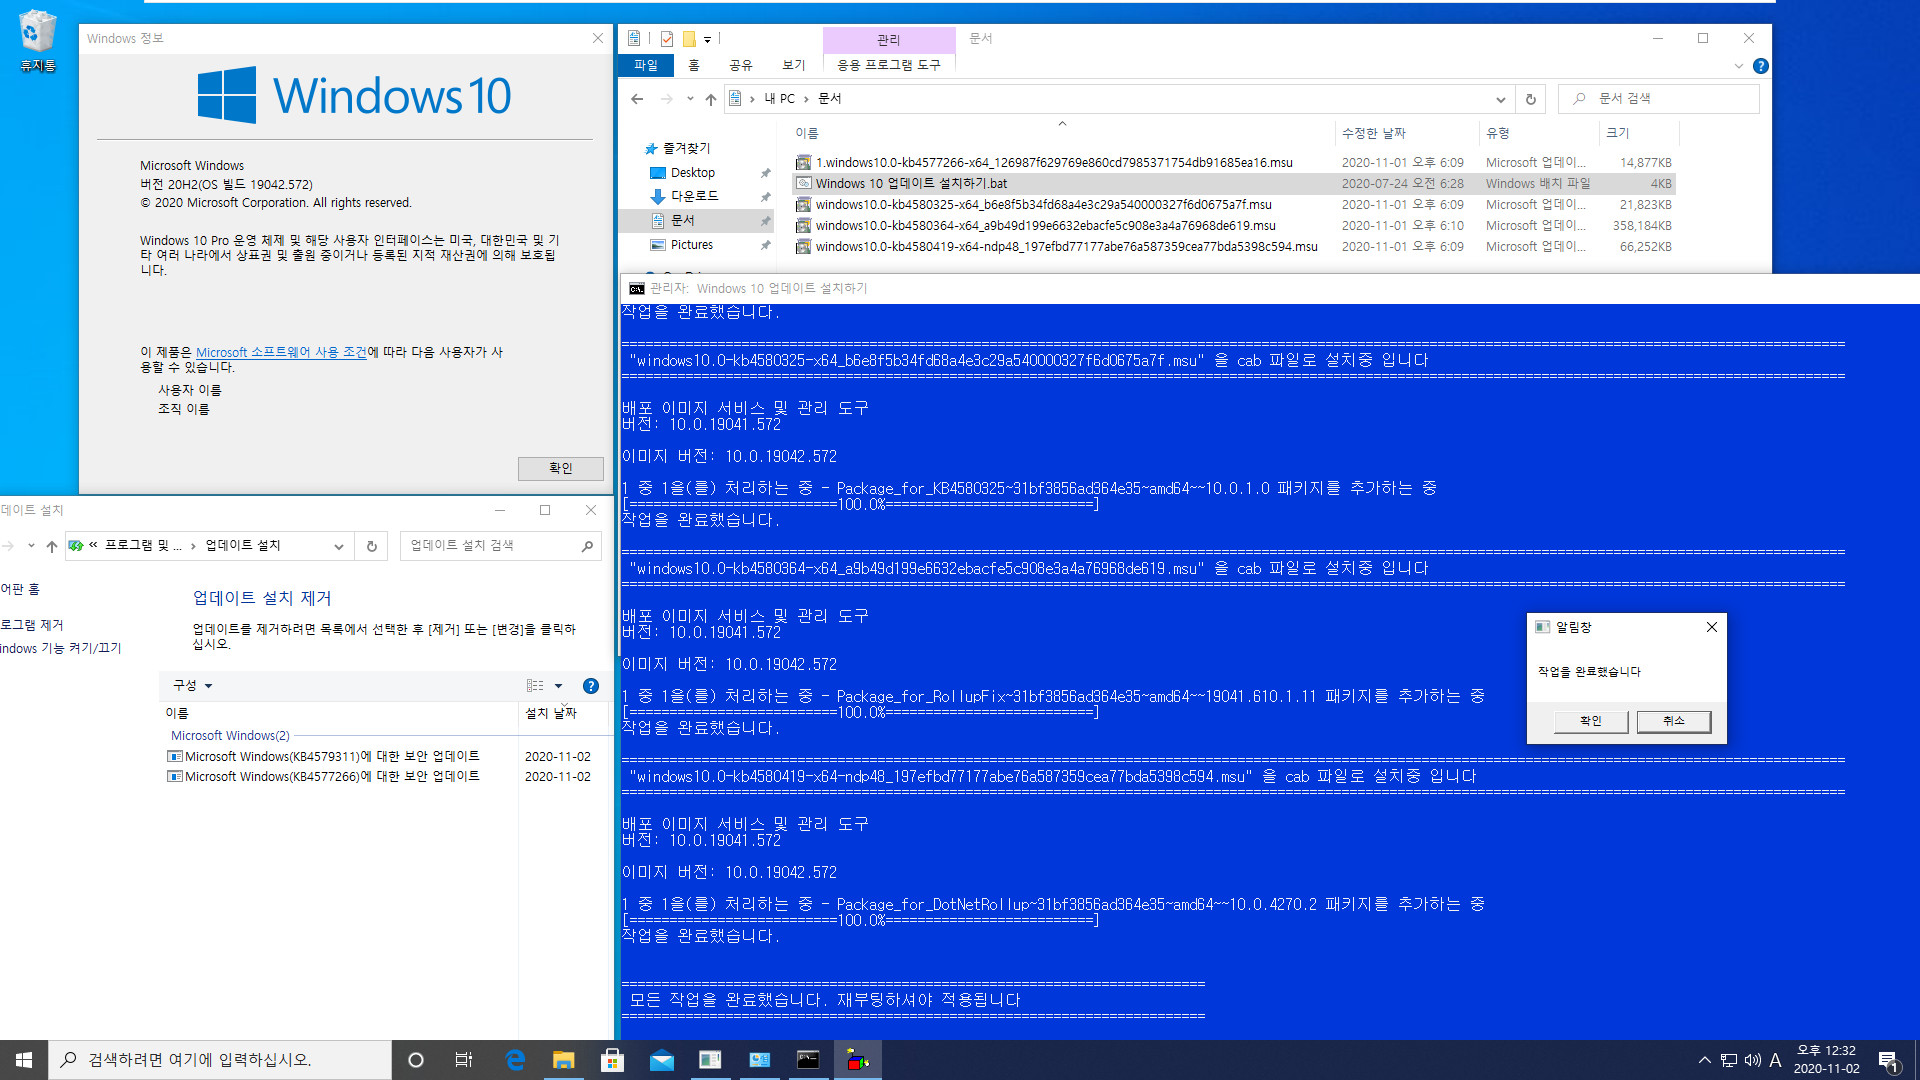 Windows 10 버전 20H2 기능 업데이트 KB4562830 폴더의 mum 파일들만 찾아서 설치하기.bat - 크로미엄 엣지 설치하지 않고 버전 20H2만 설치하기 테스트 -  msu 파일 설치하면 되네요 2020-11-02_123211.jpg